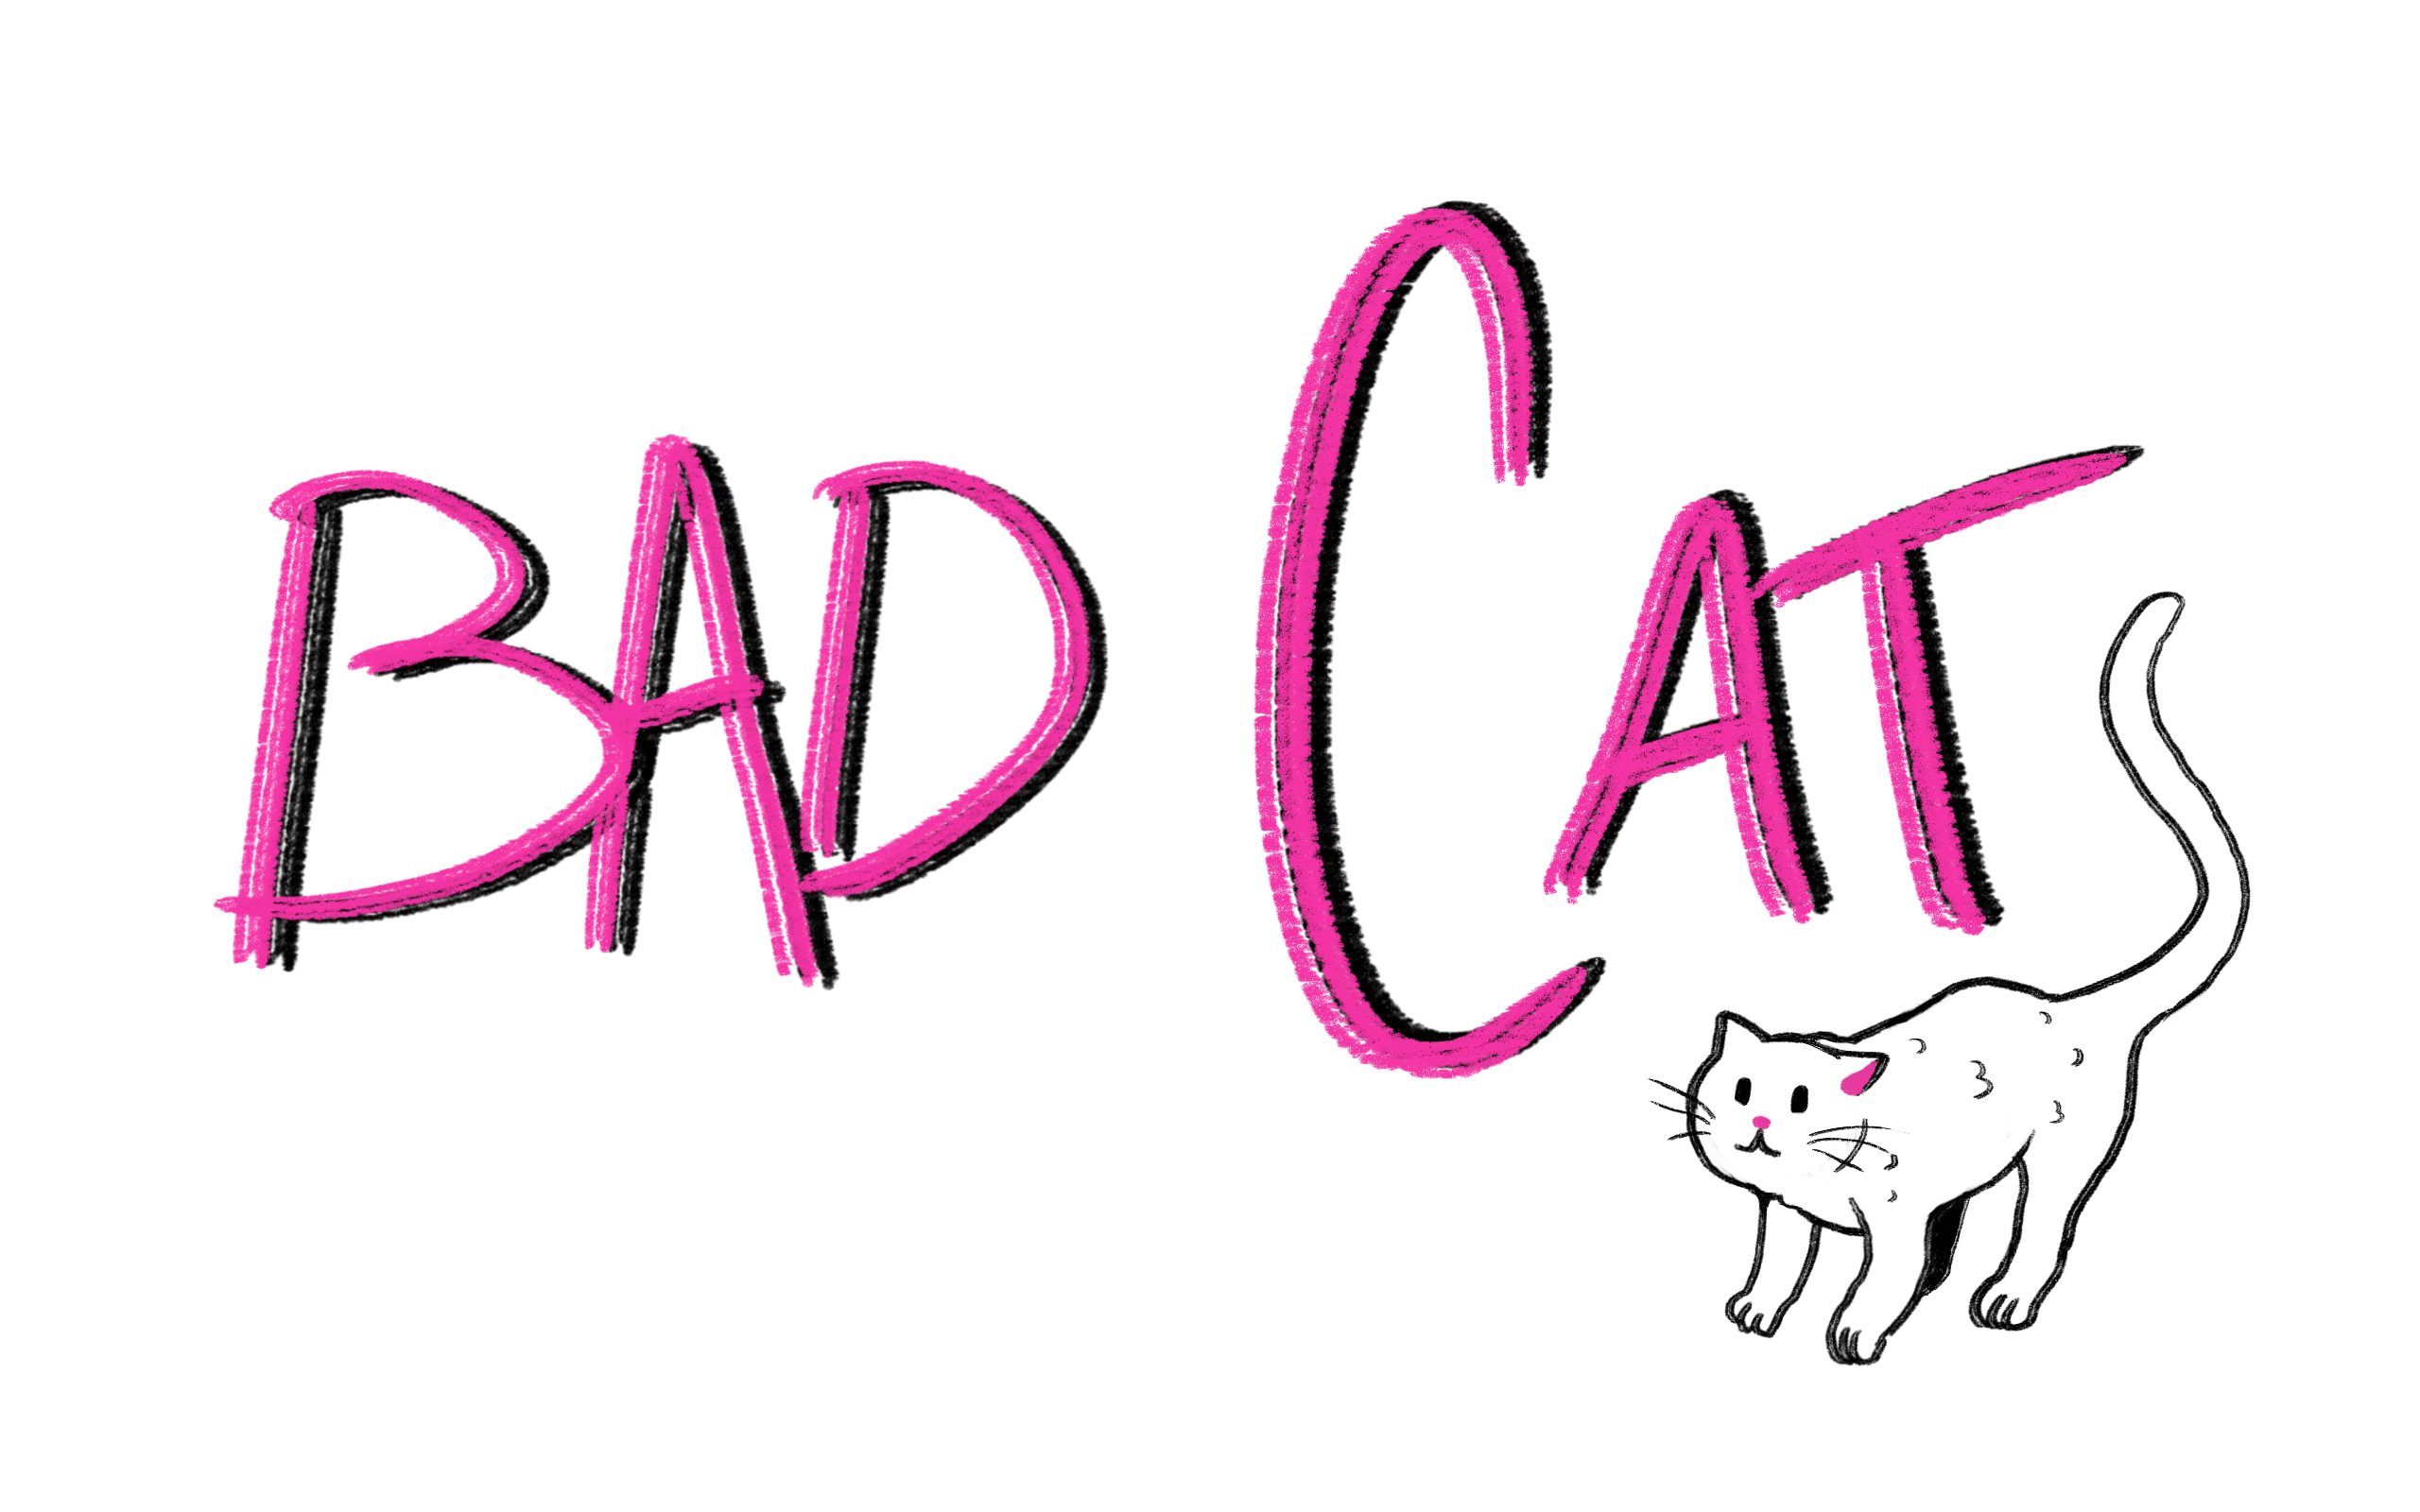 BAD CATS